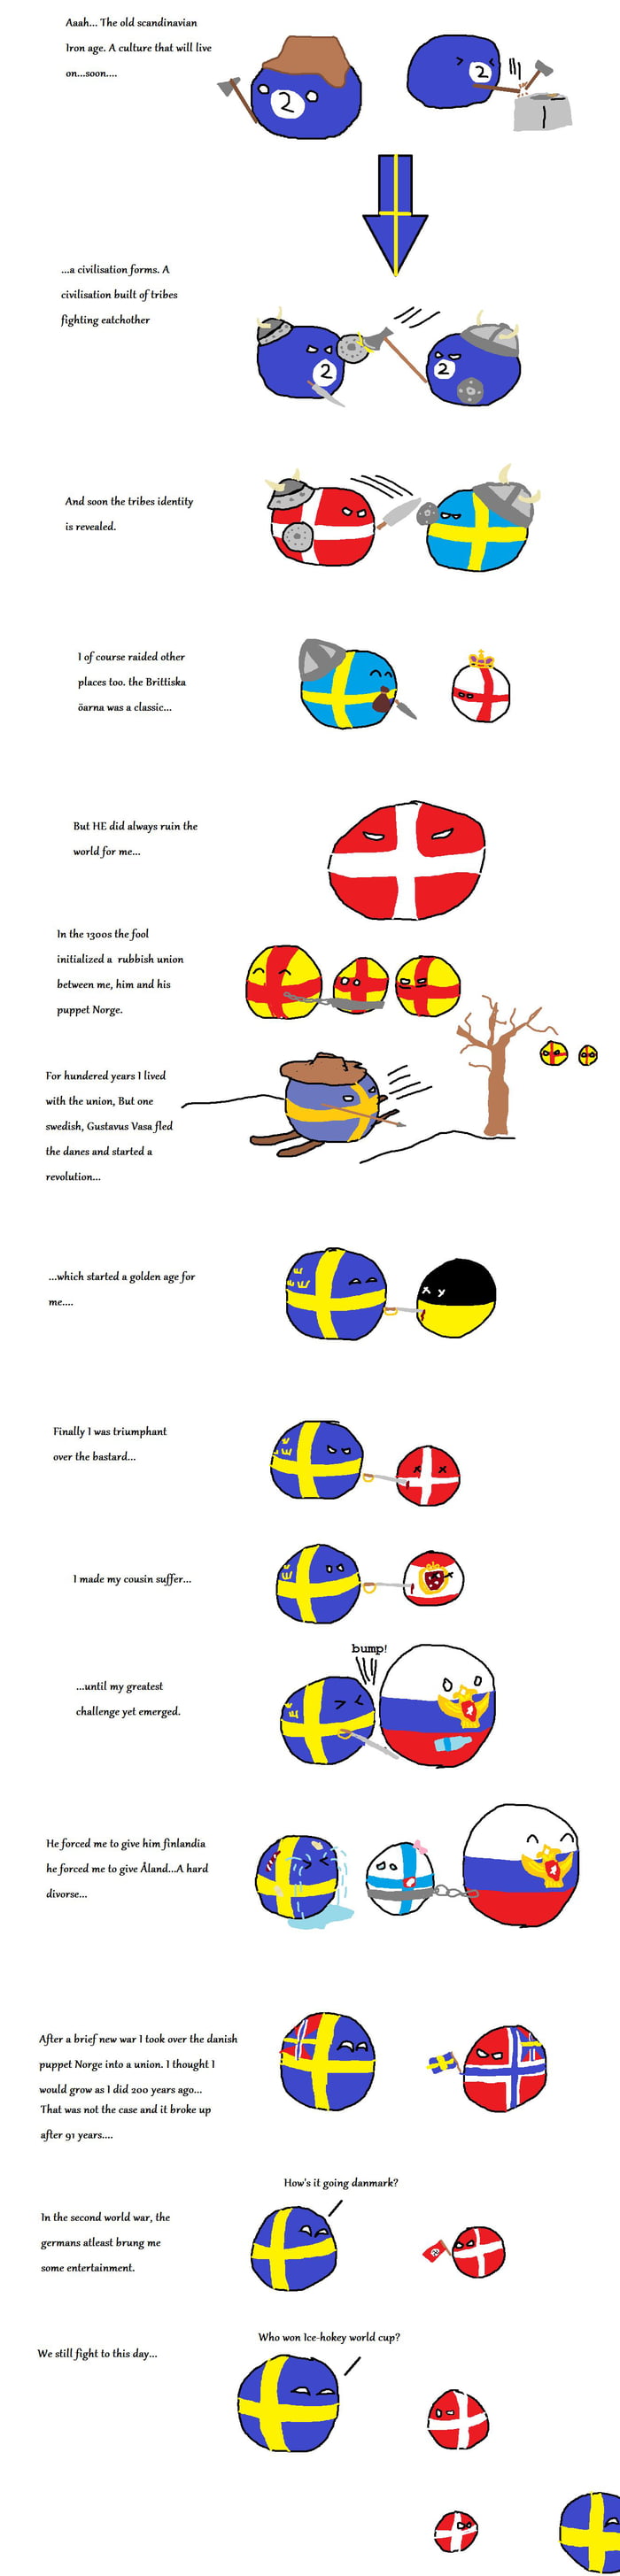 History Of Sweden 9gag